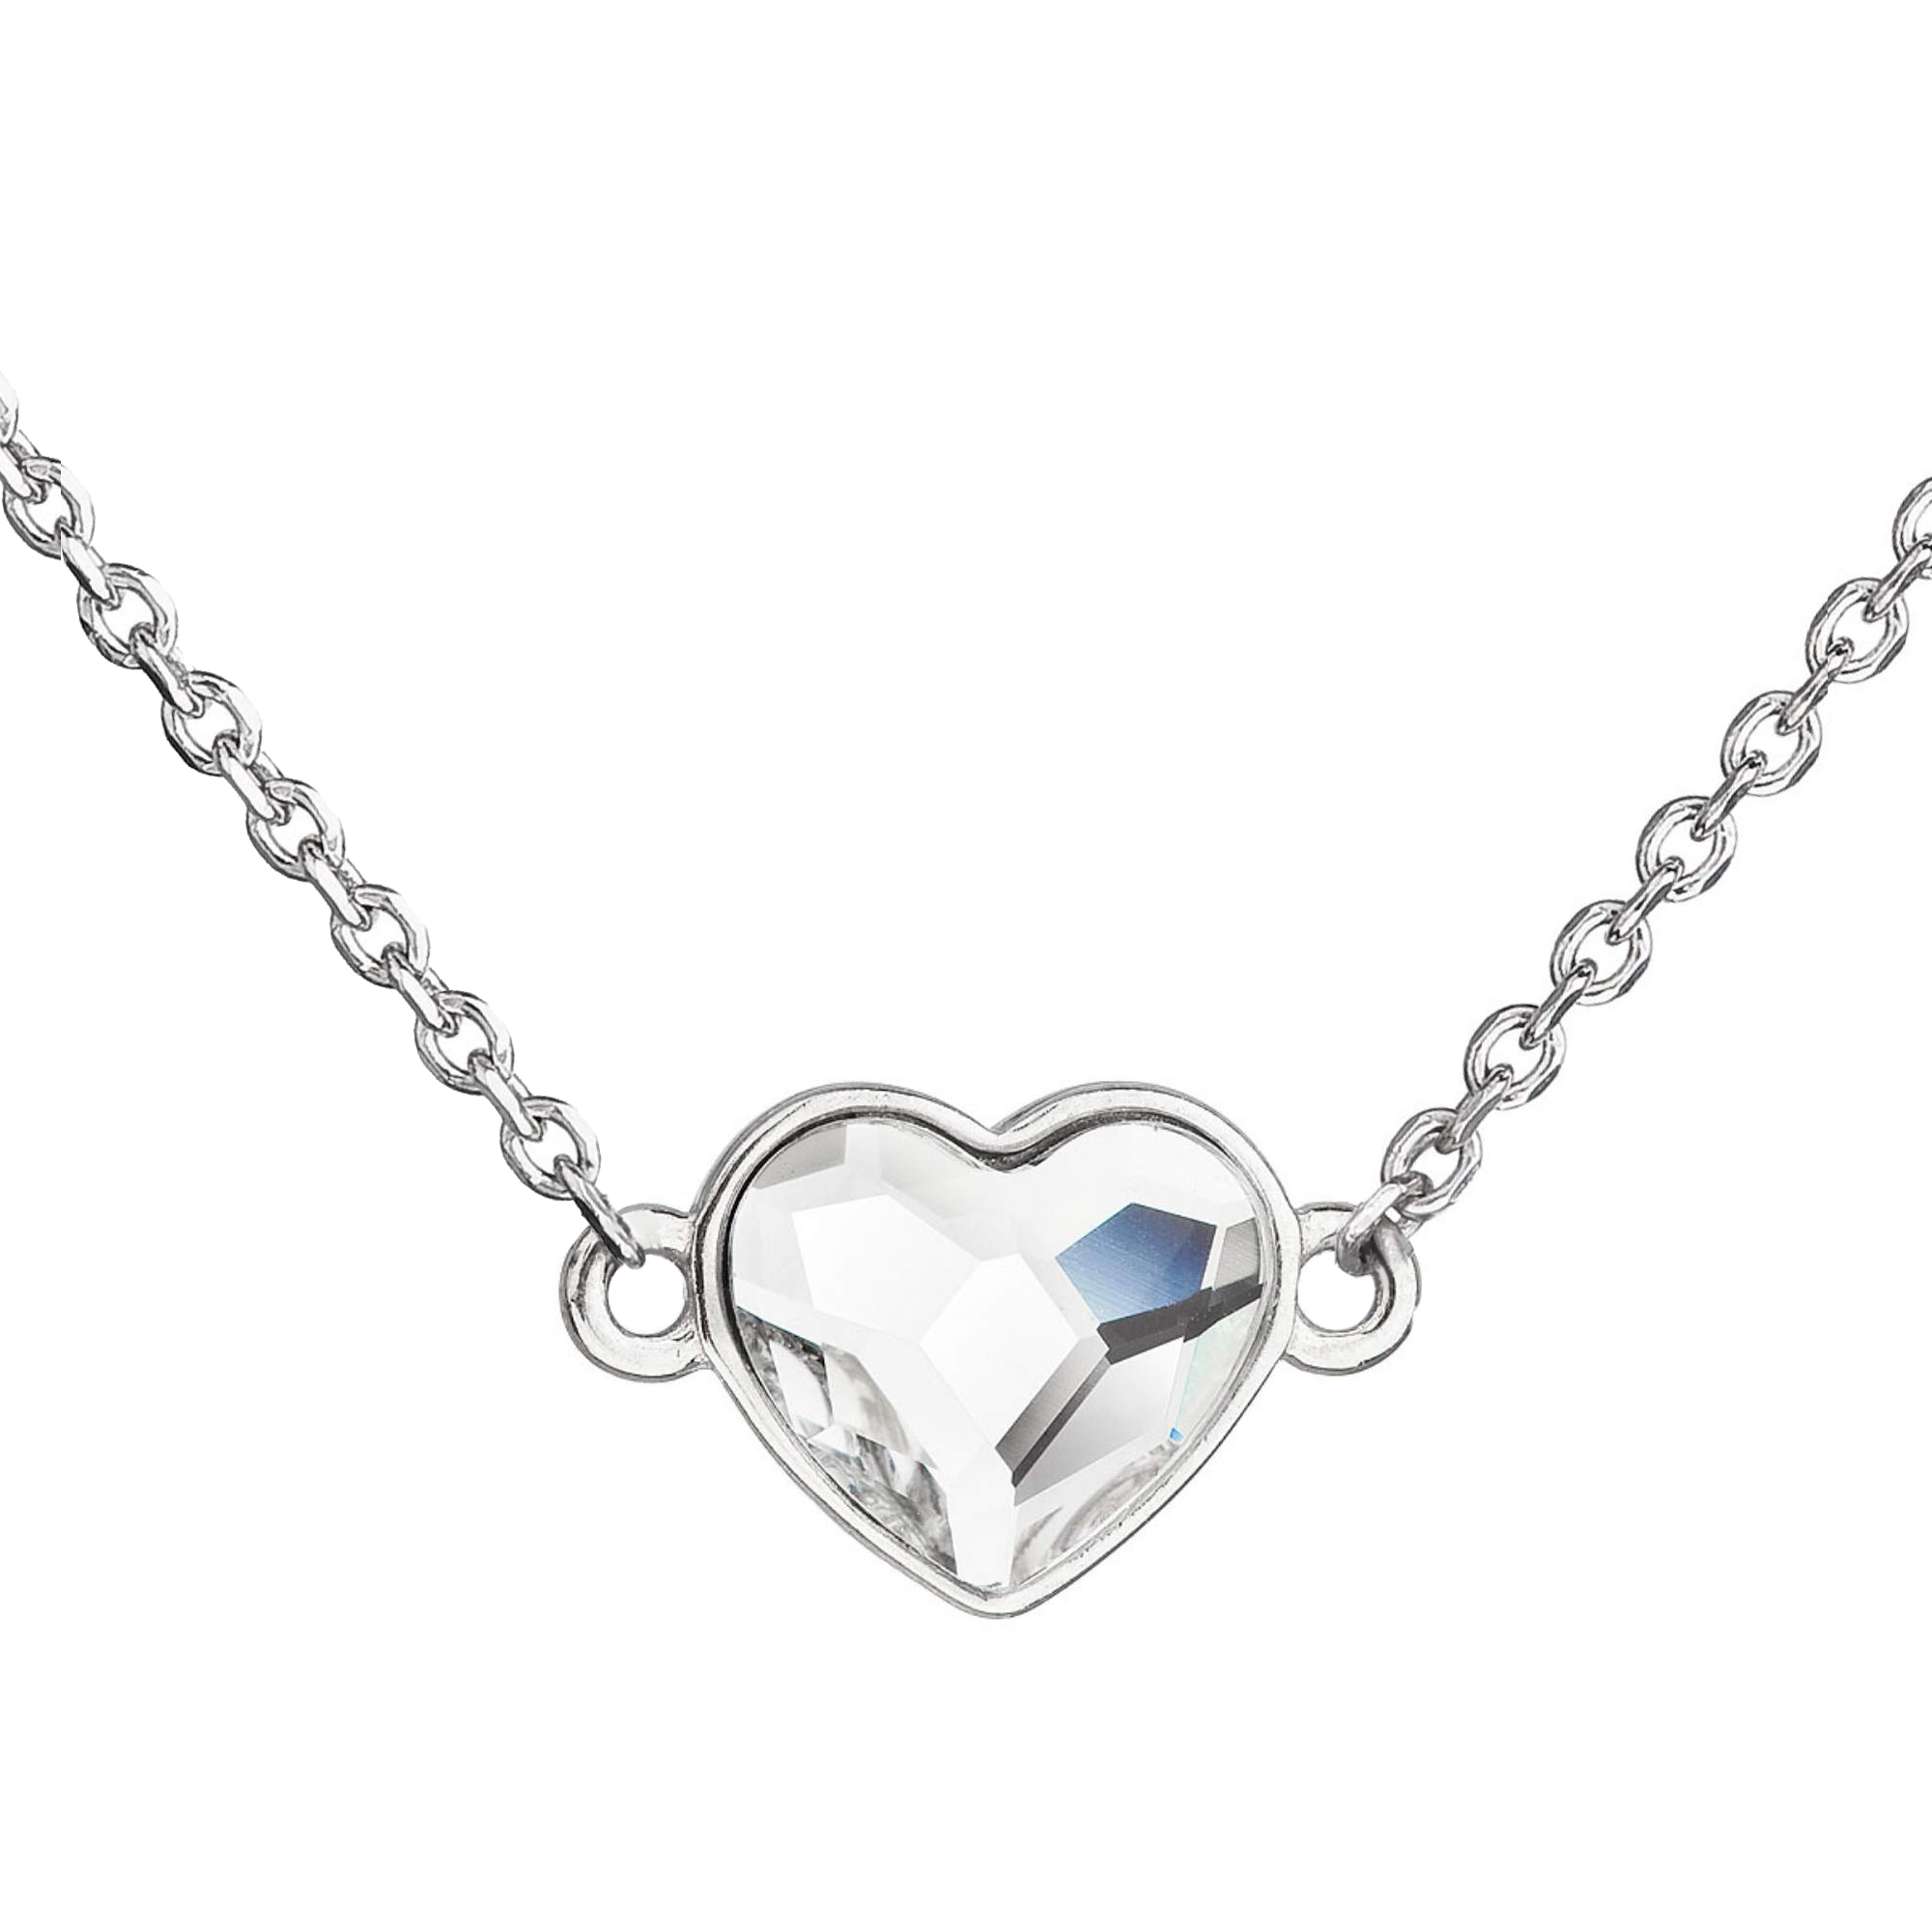 Strieborný náhrdelník s krištálom Swarovski biele srdce 32061.1 crystal